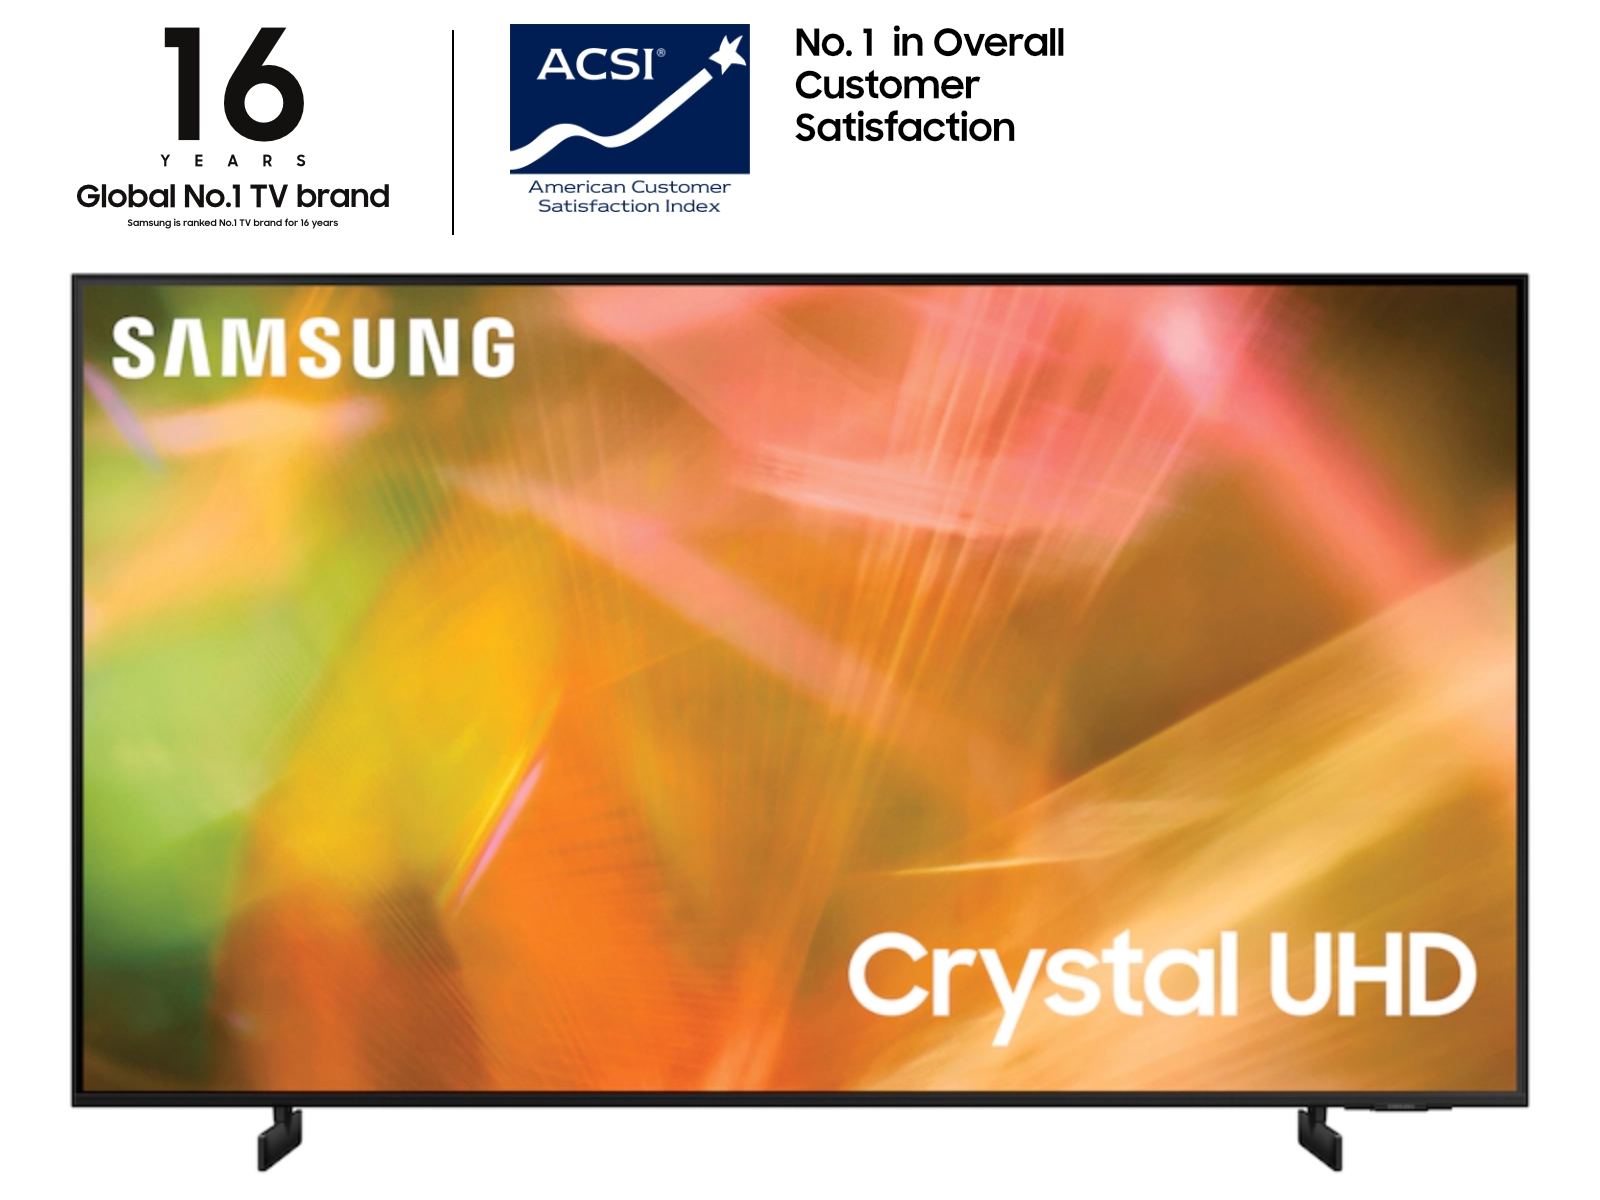 Samsung Crystal UHD TVs | Samsung US